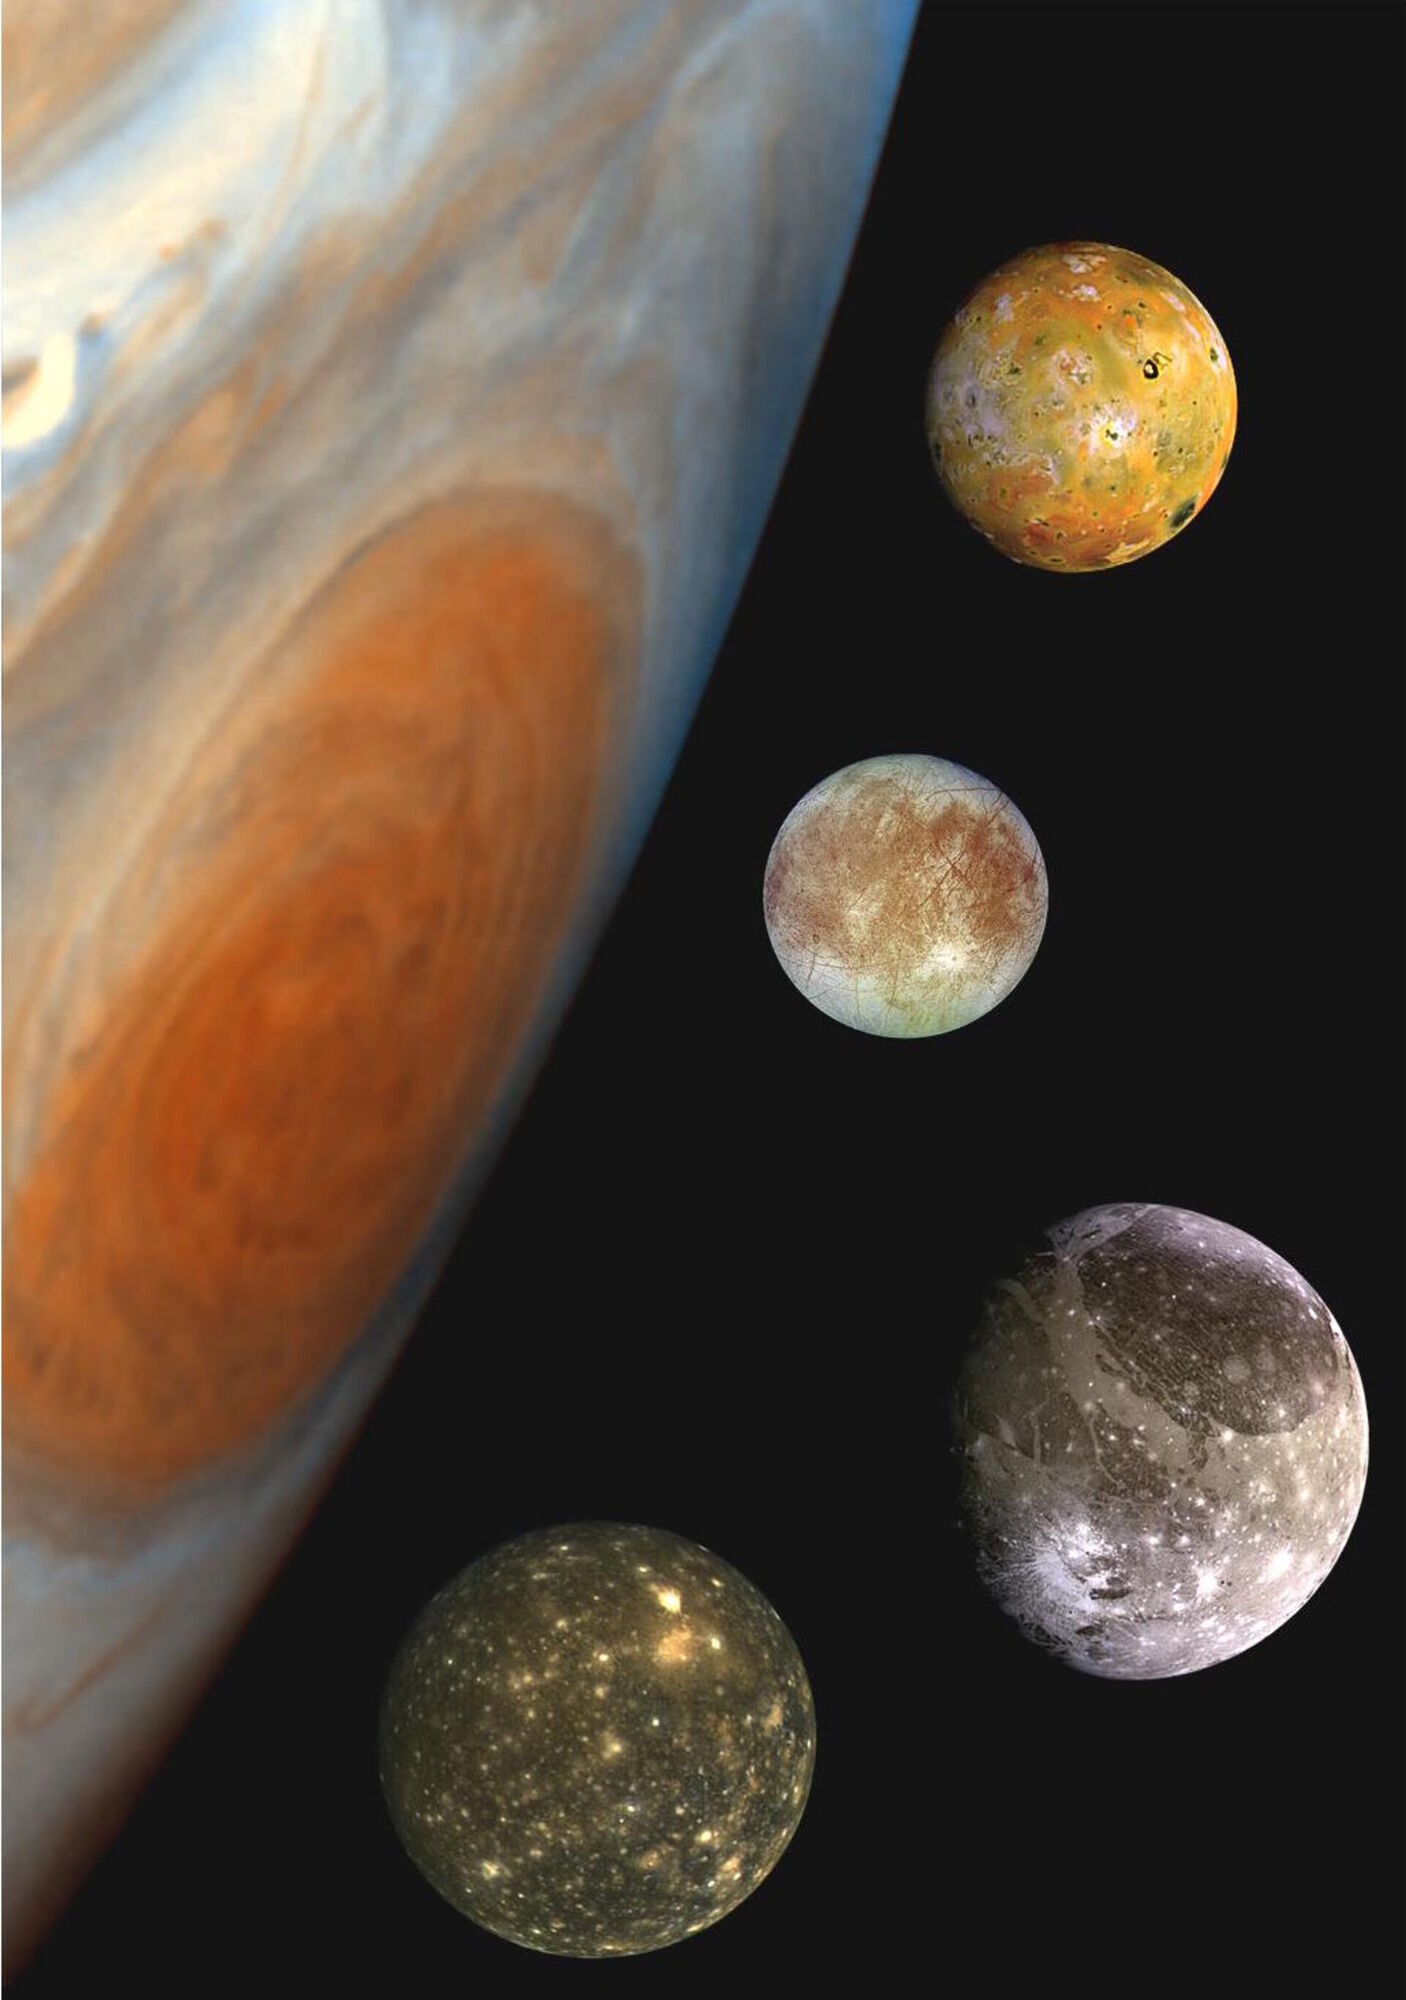 Юпитер и его спутники – Ио, Европа, Ганимед и Каллисто